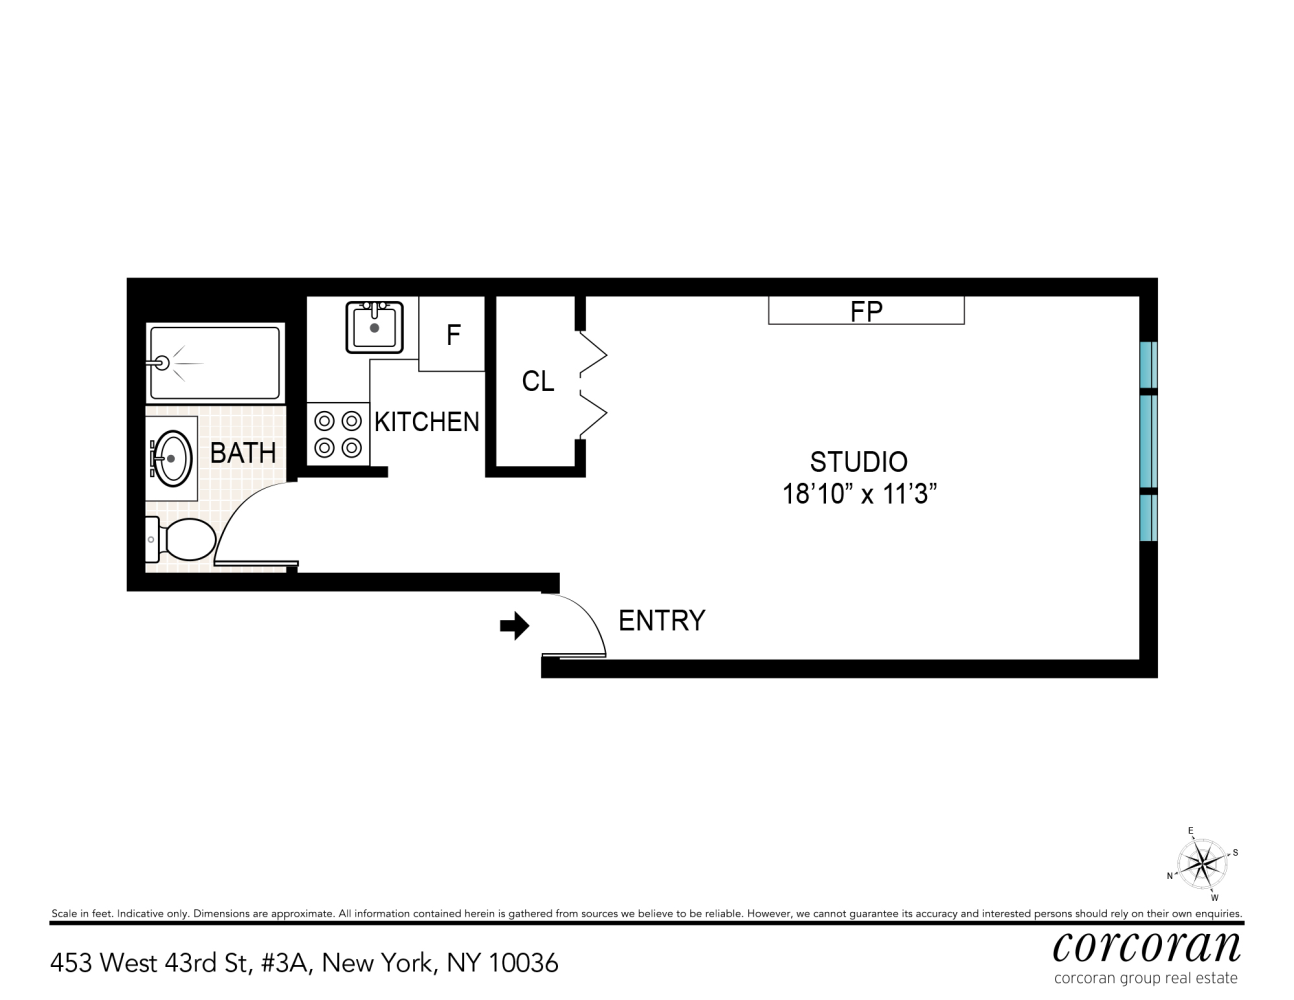 Floorplan for 453 West 43rd Street, 3A